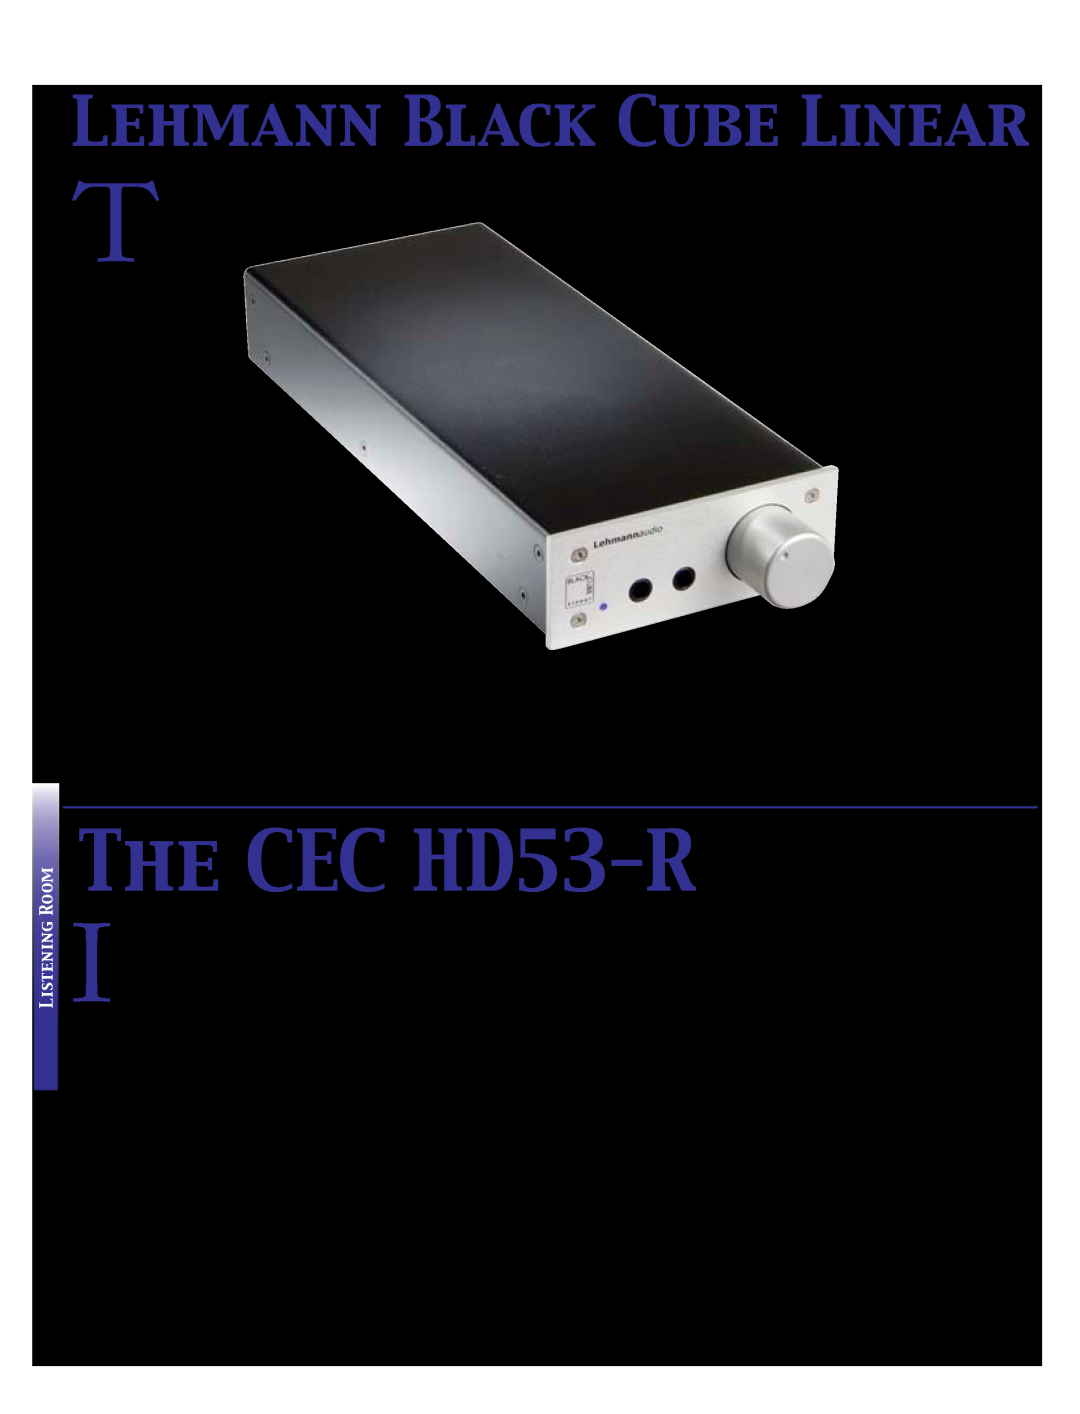 Koss 76 manual THE CEC HD53-R, Lehmann Black Cube Linear 